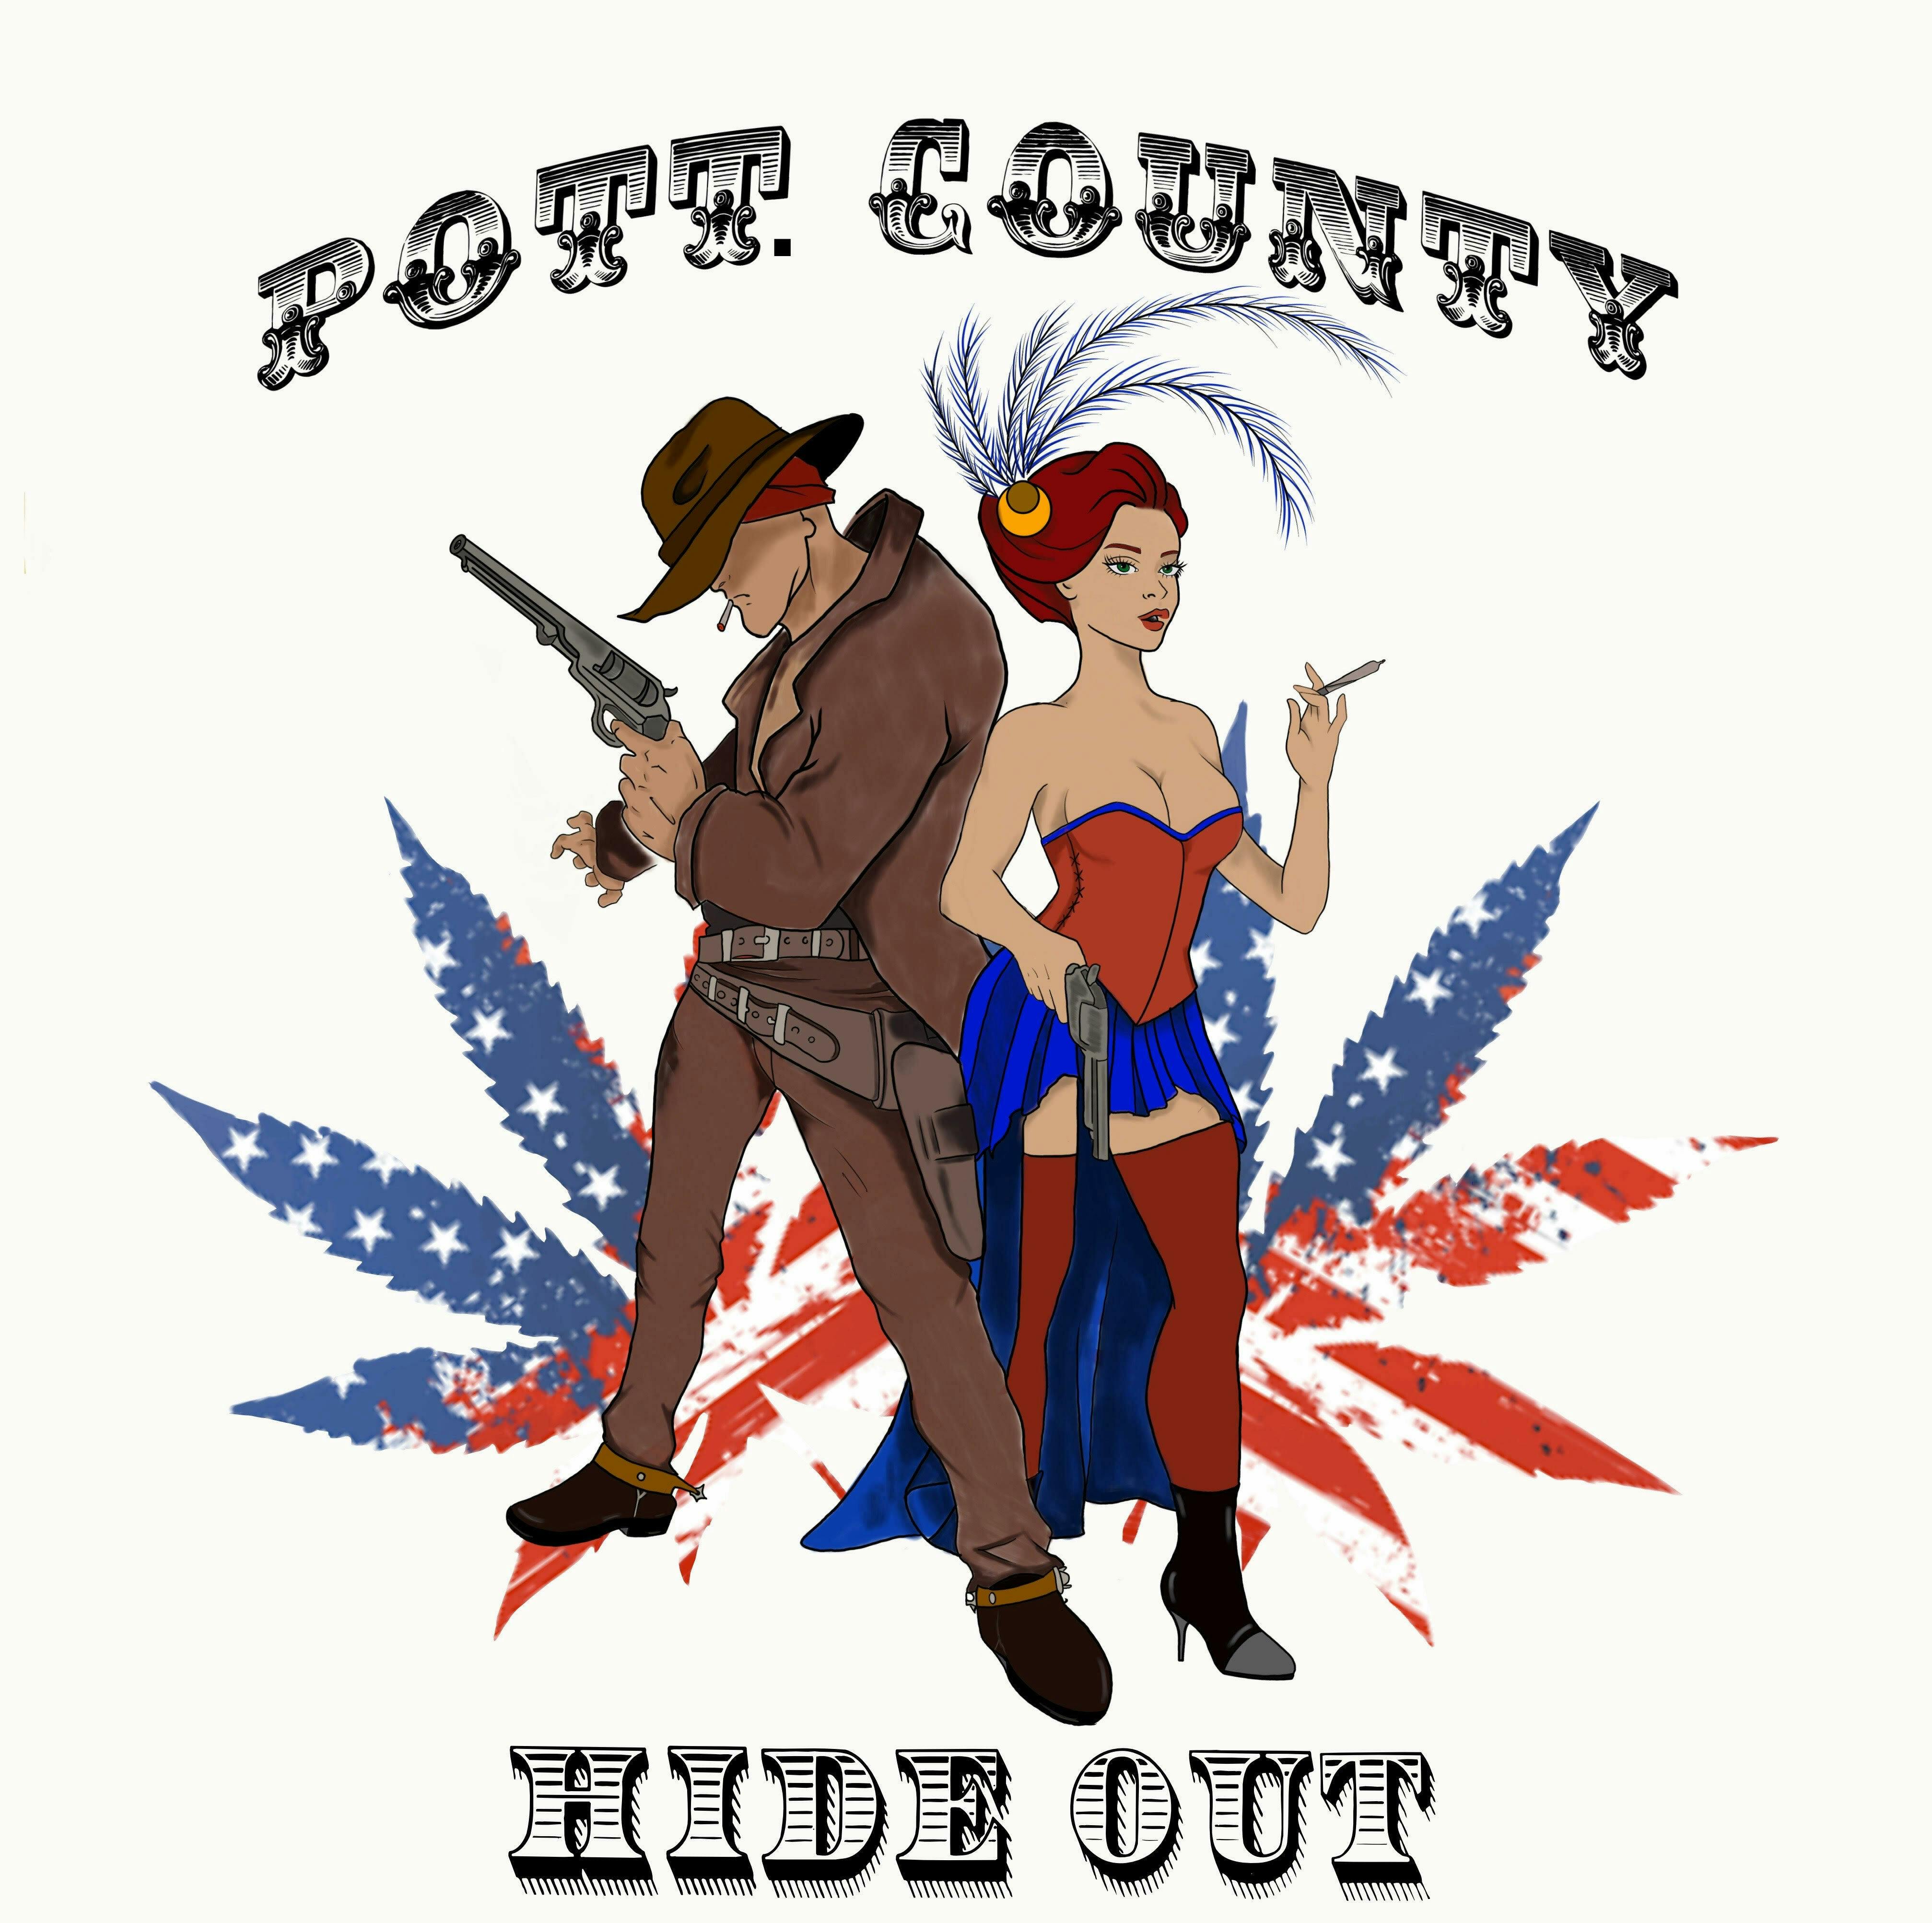 Pott County Hide-Out